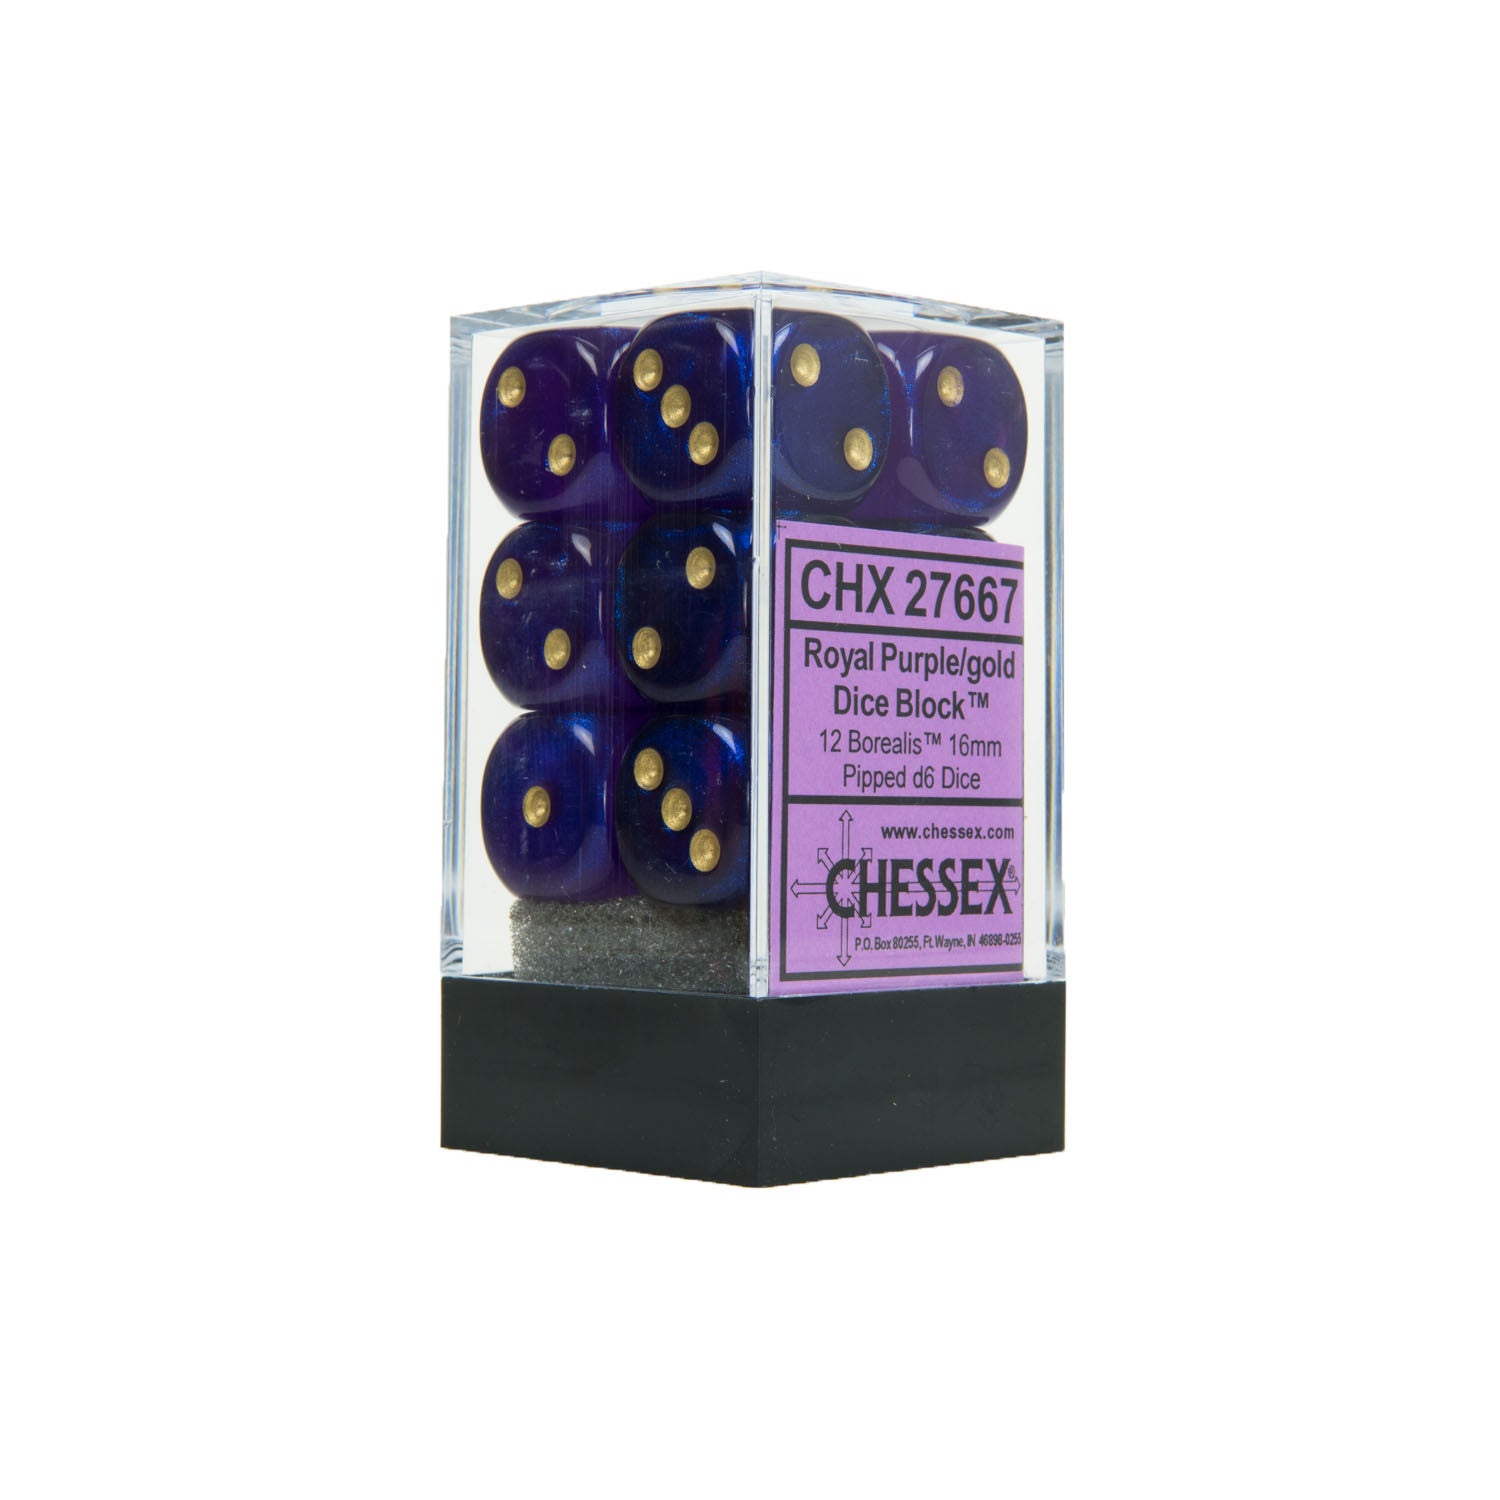 Chessex CHX27667 12 Royal Purple w/ gold Borealis™ 16mm d6 Dice